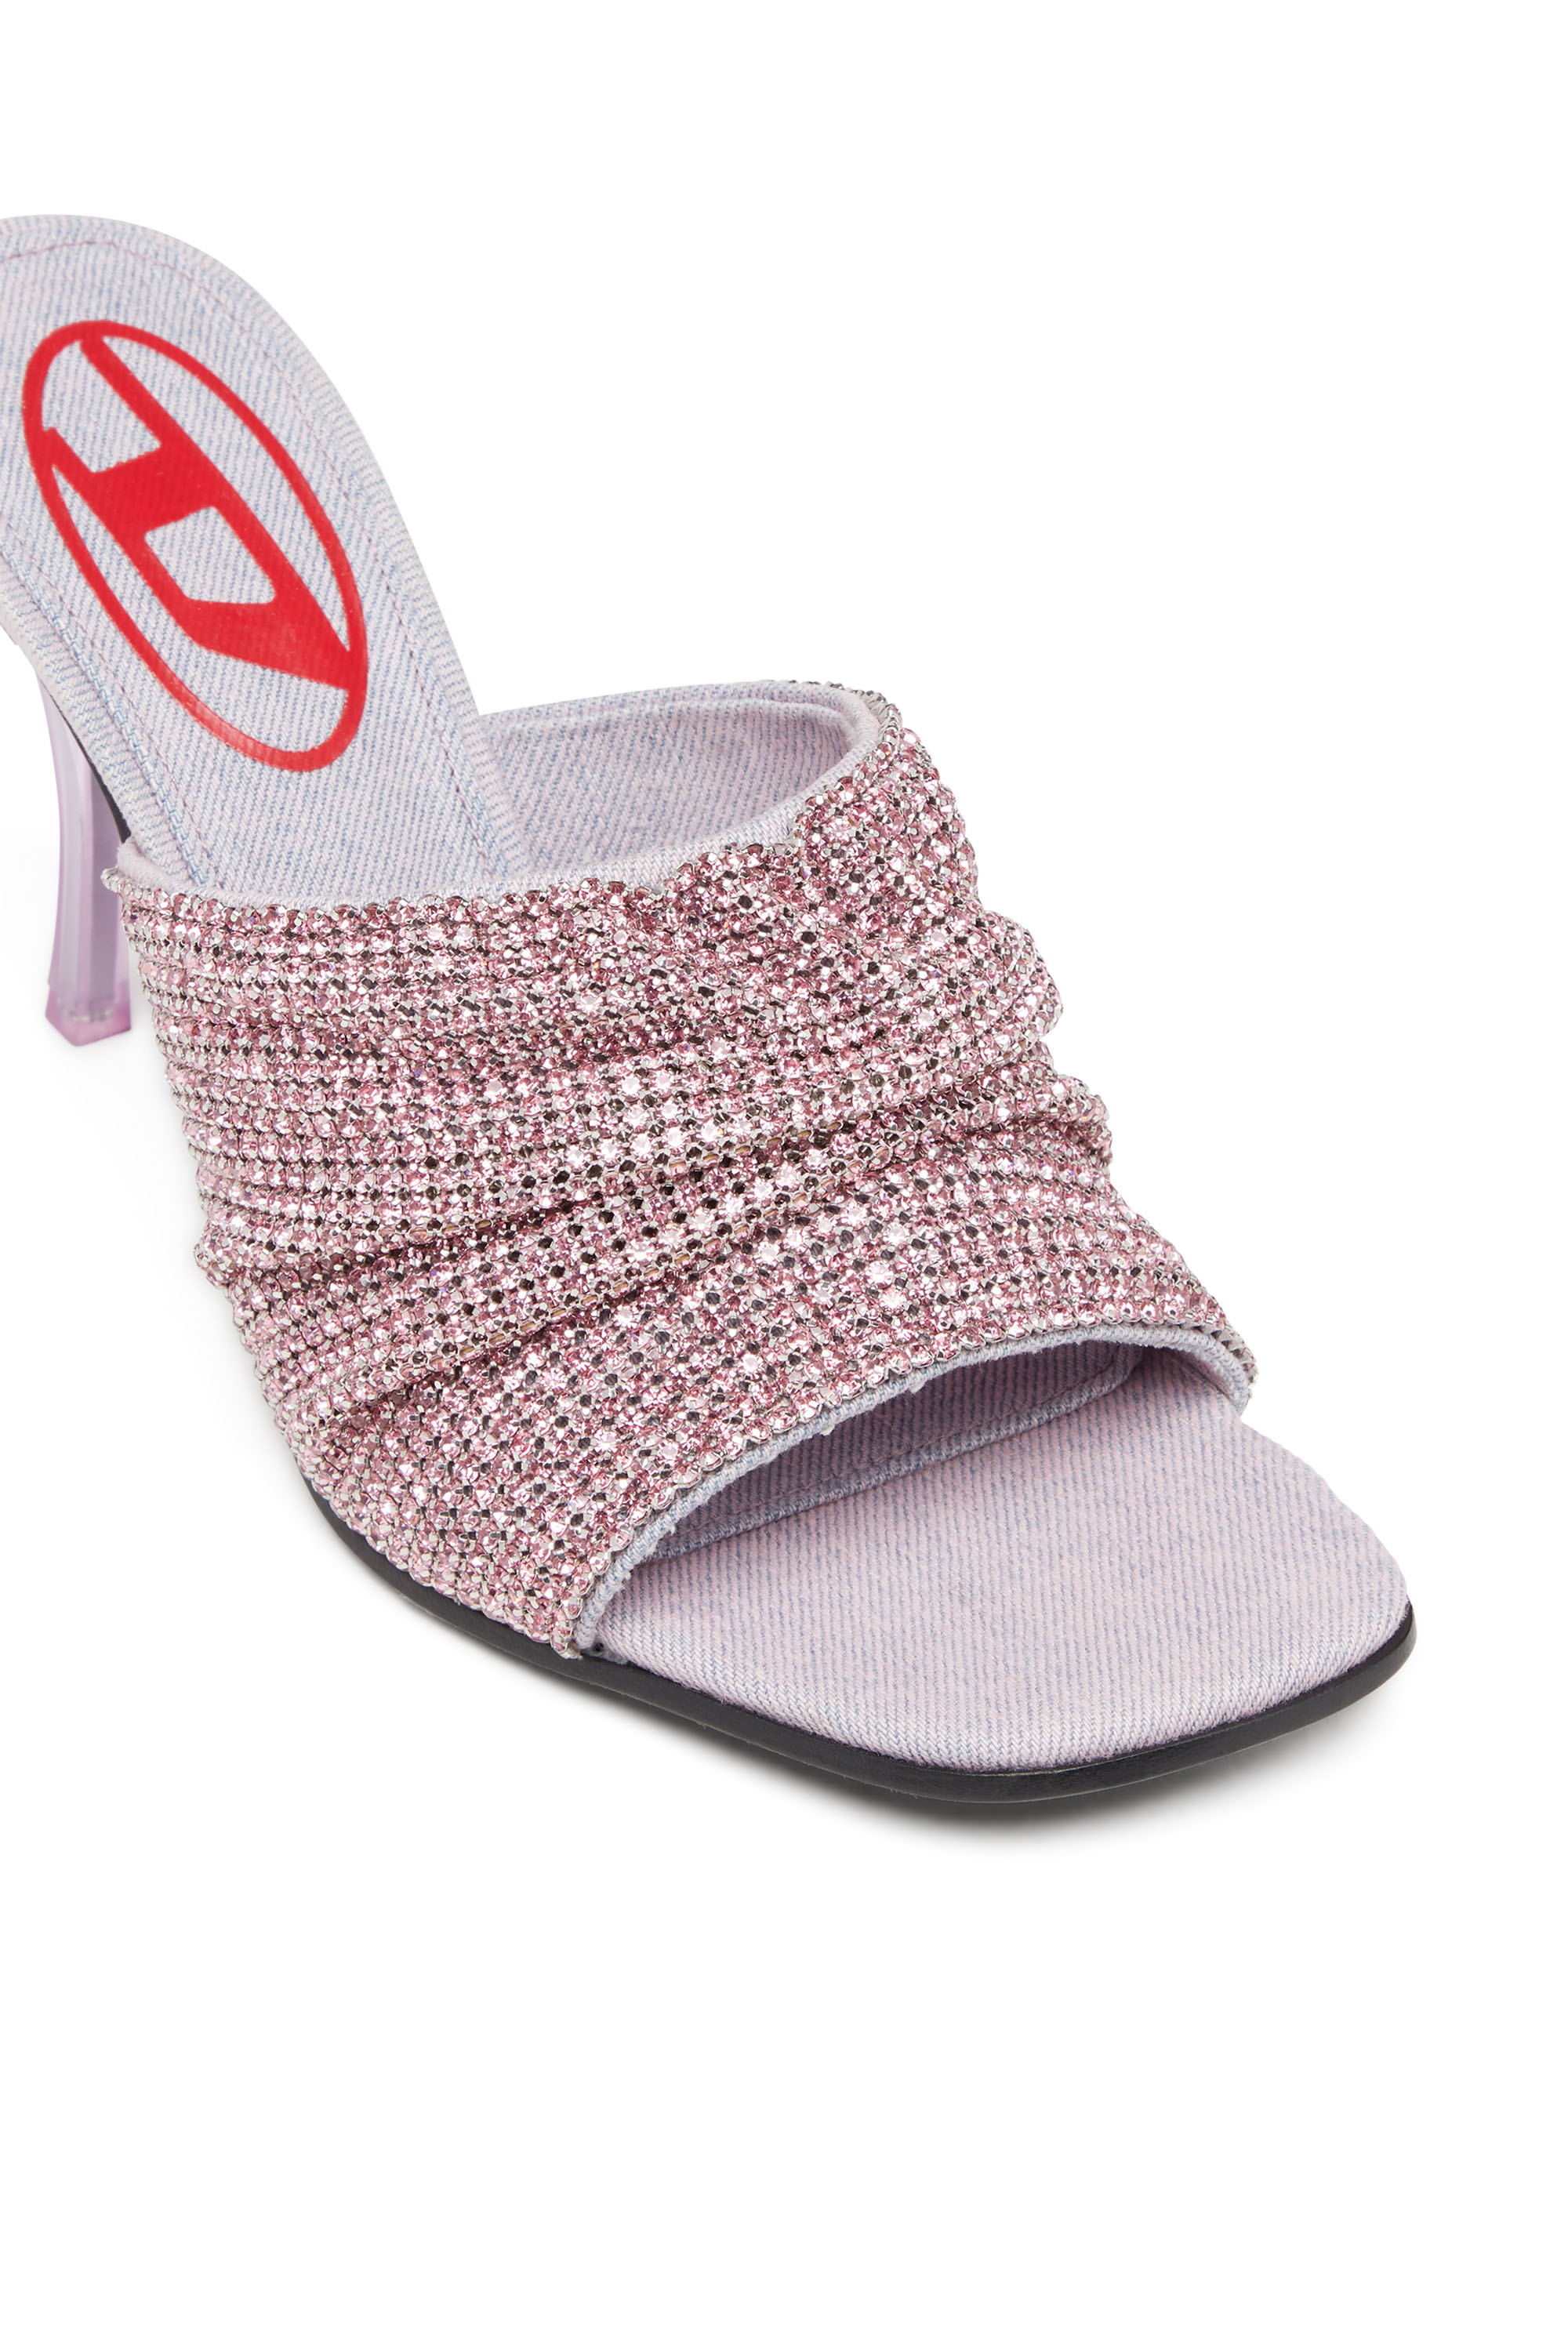 Diesel - D-SYDNEY SDL S, Woman D-Sydney Sdl S Sandals - Mule sandals with rhinestone band in Pink - Image 7